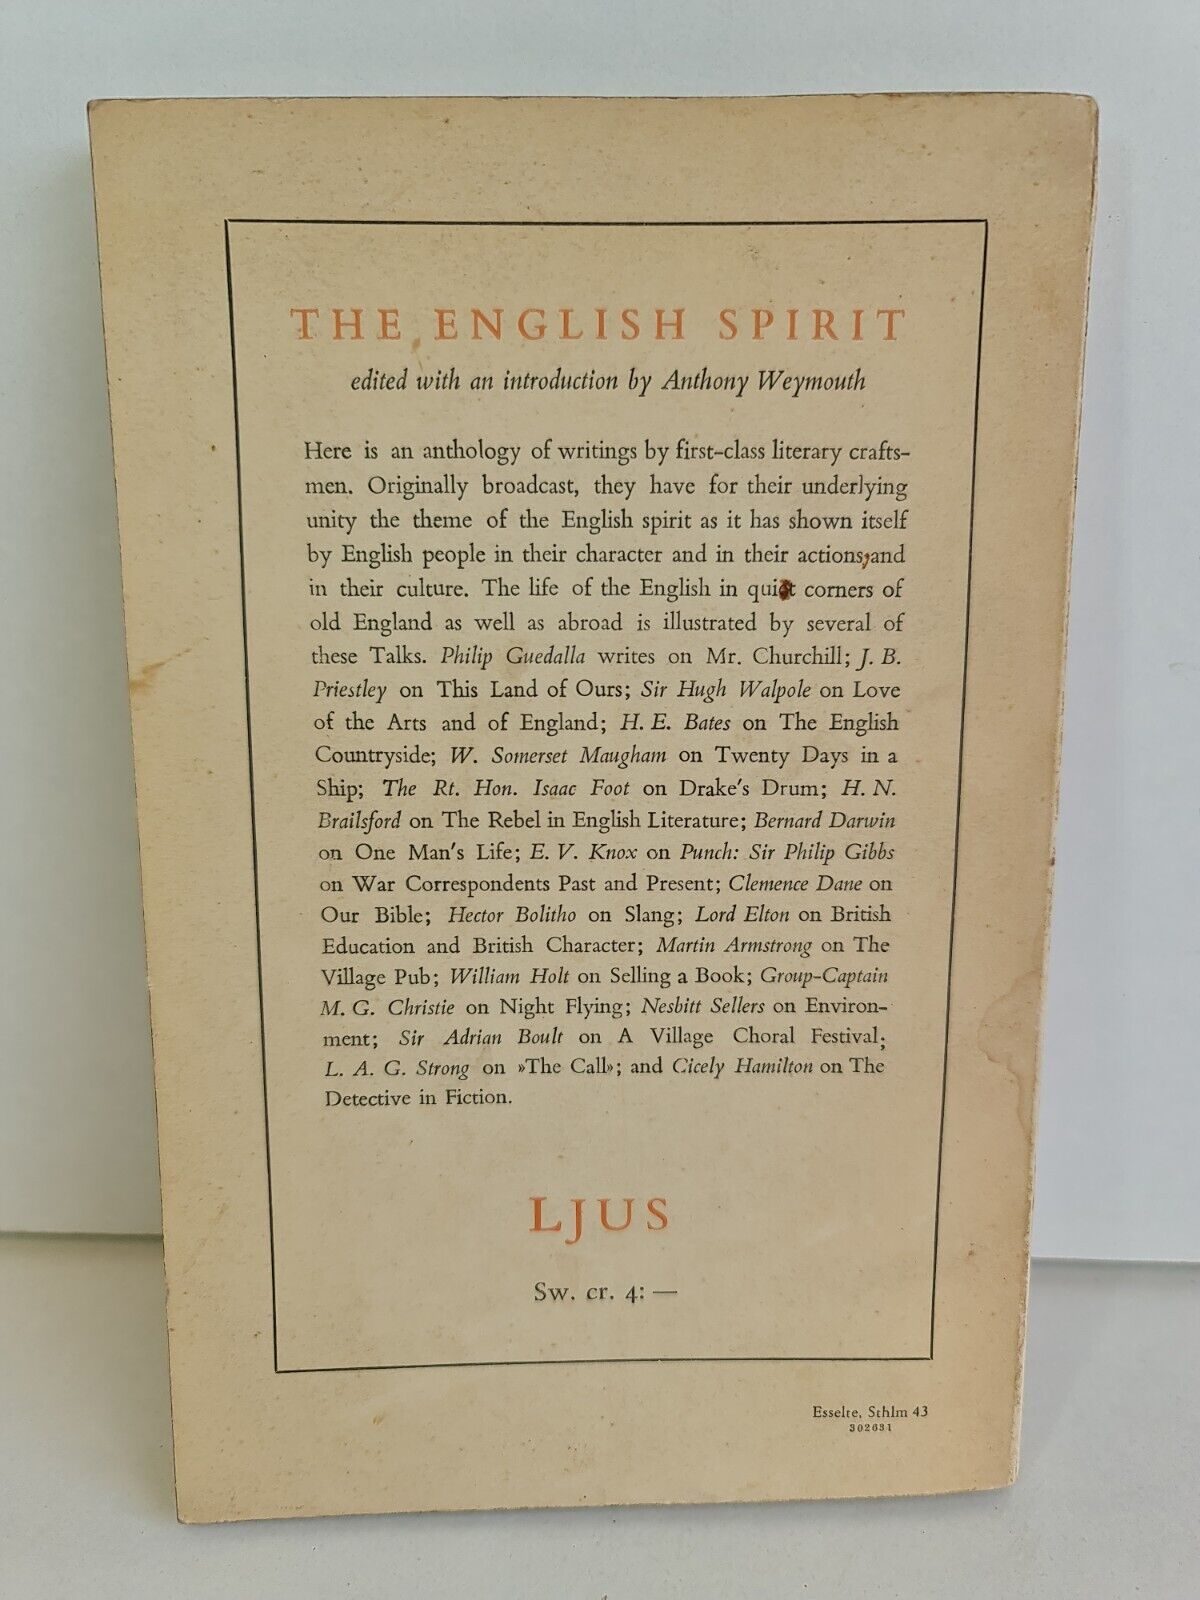 The English Spirit by J B Priestley (1943)